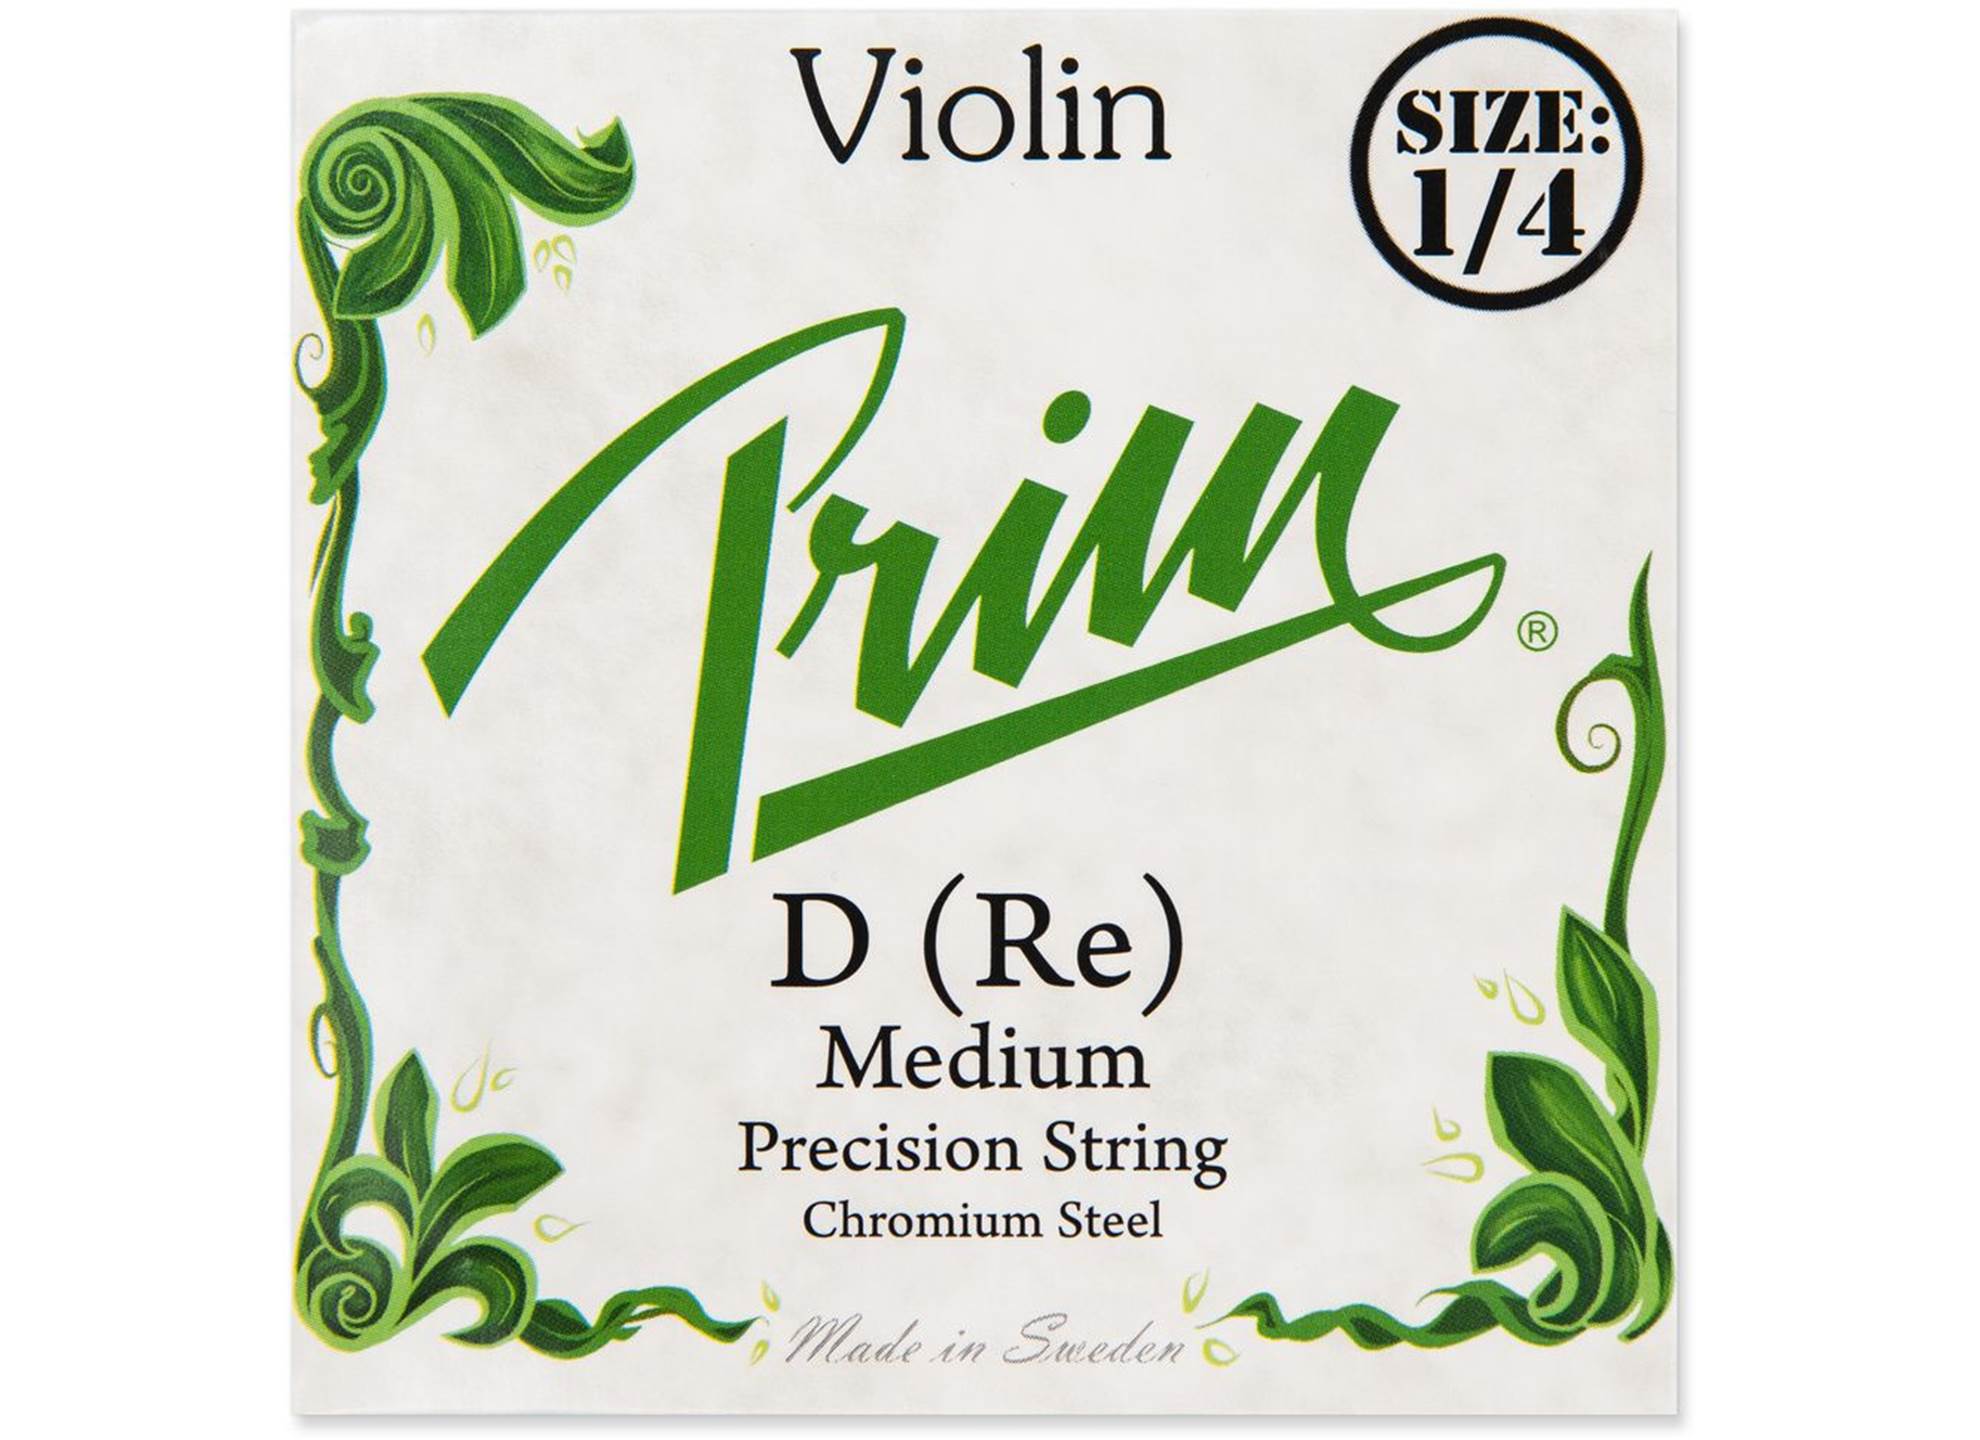 Violin 1/4 G